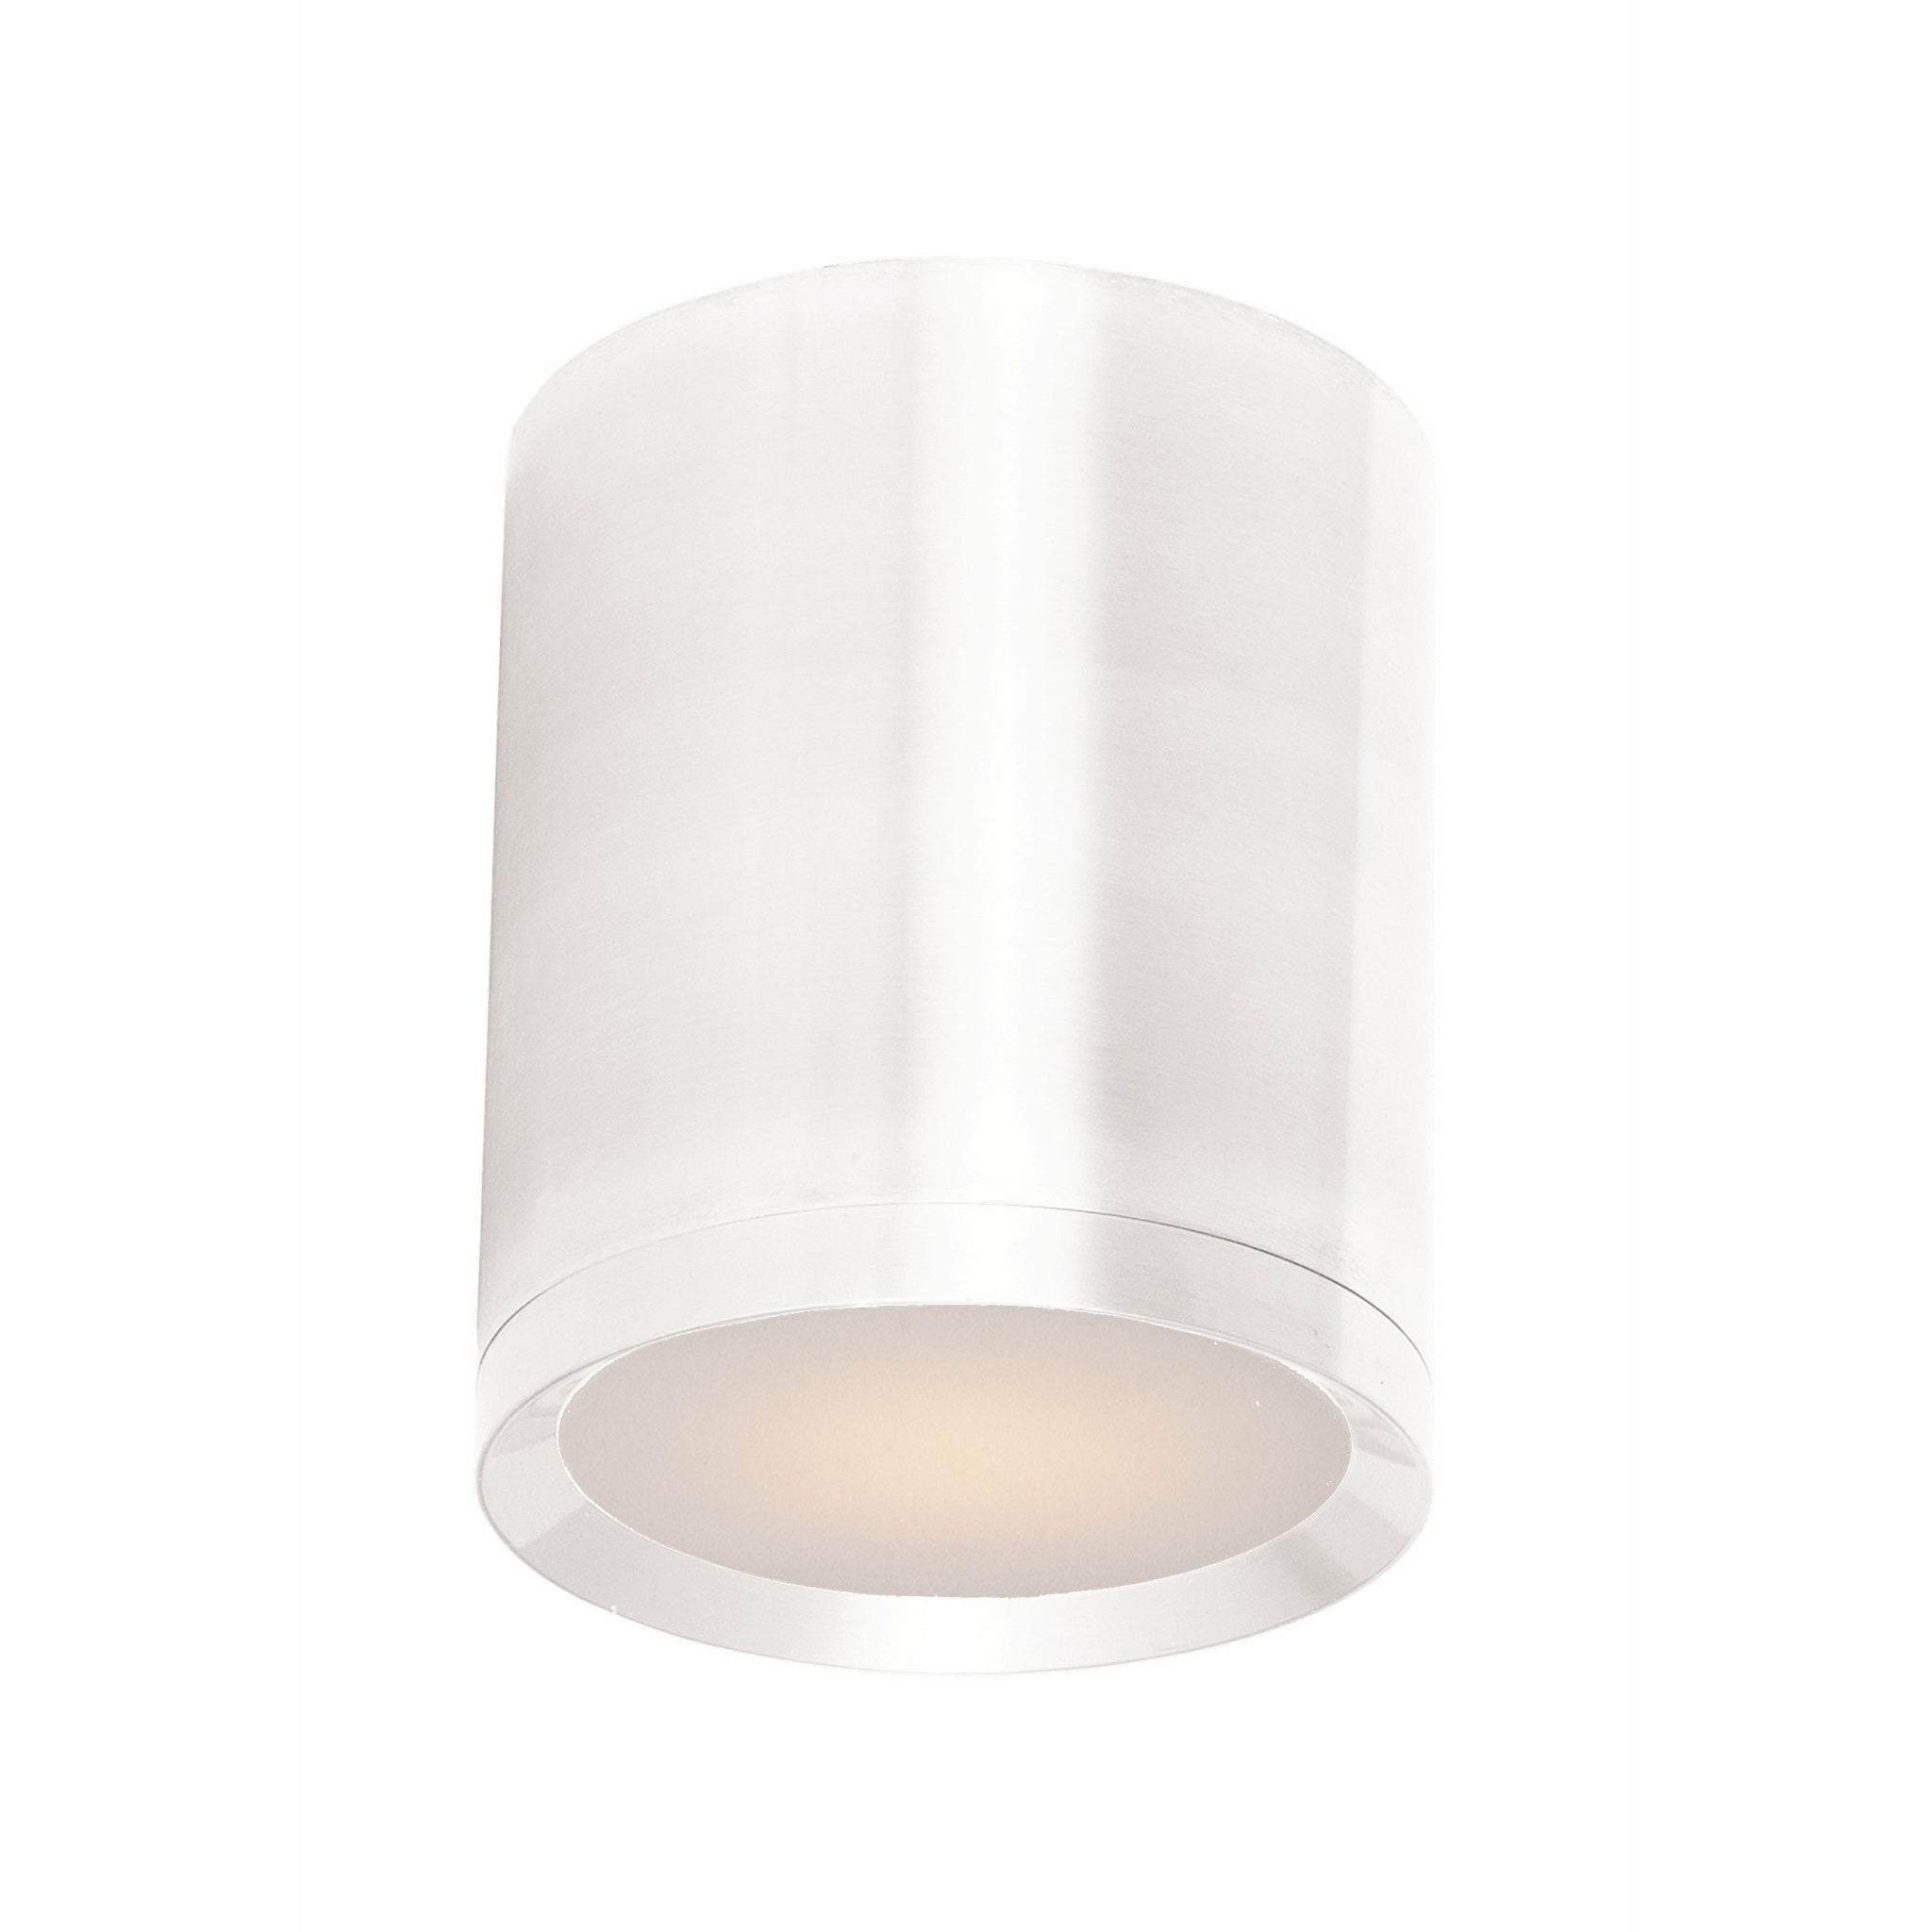 Lightray LED 1-Light Outdoor Ceiling Light